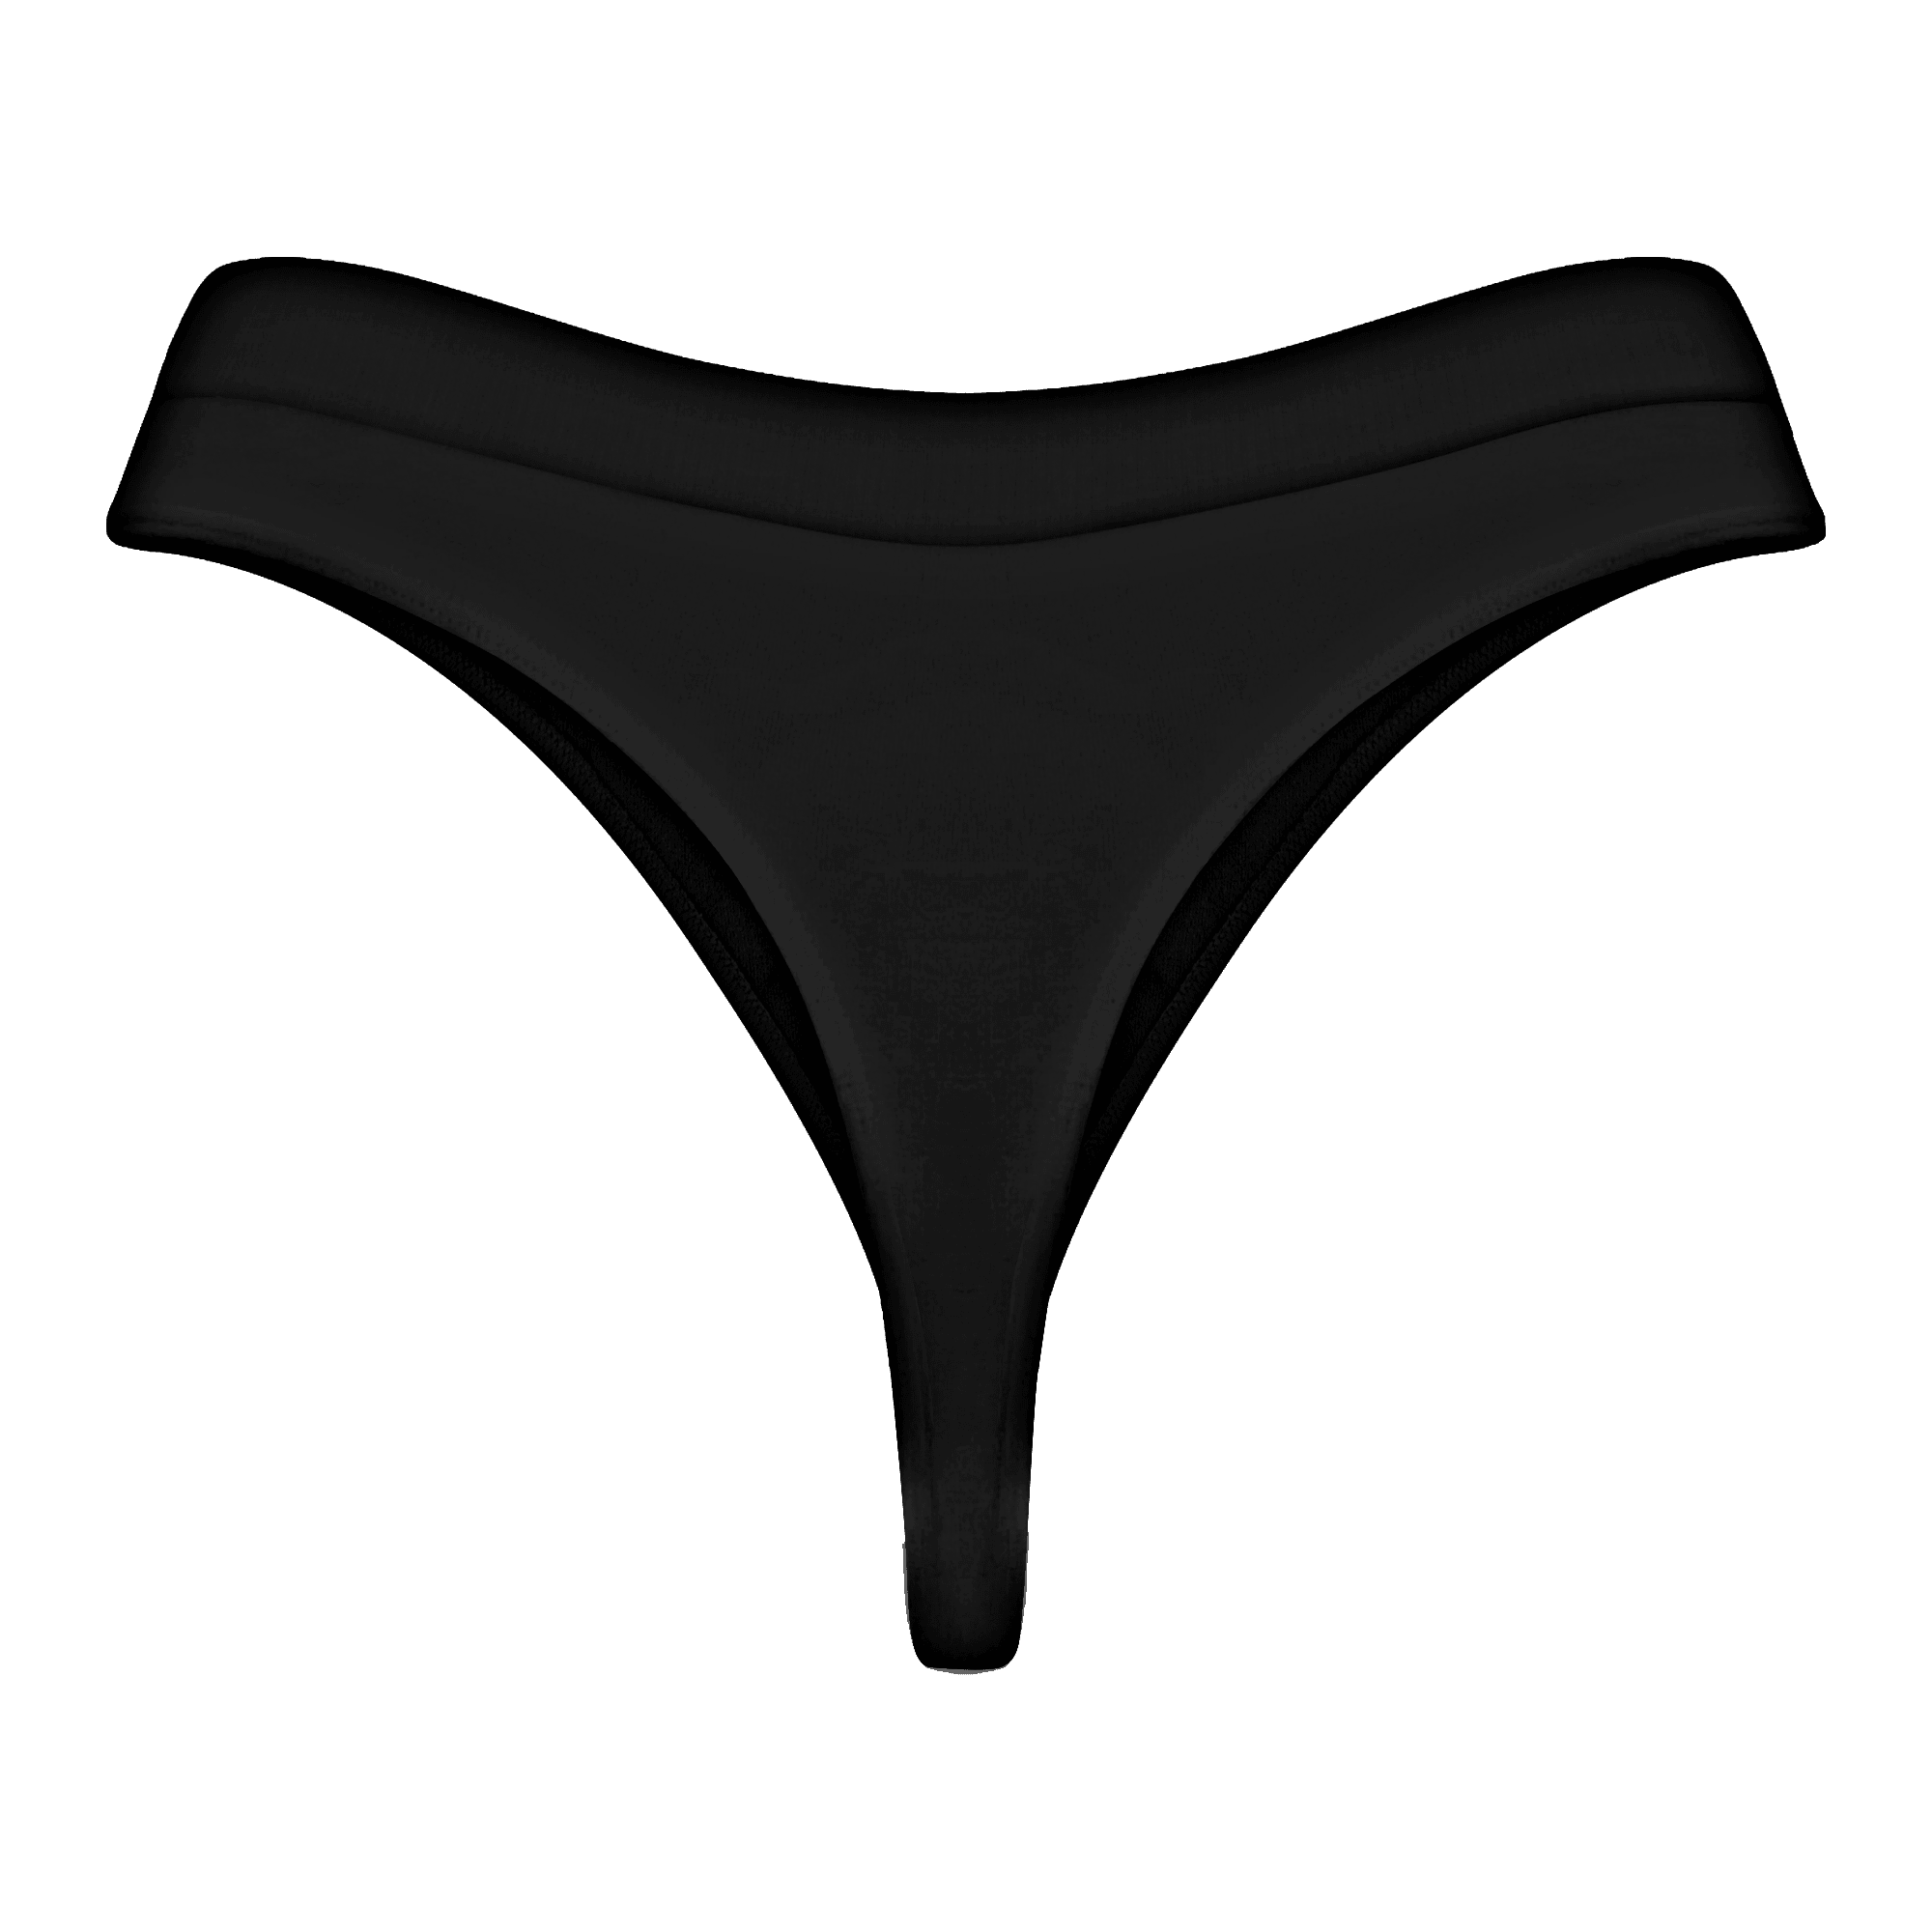 Underwear G-string Panties Briefs Women's Thong Seamless Comfortable Hollow  Out